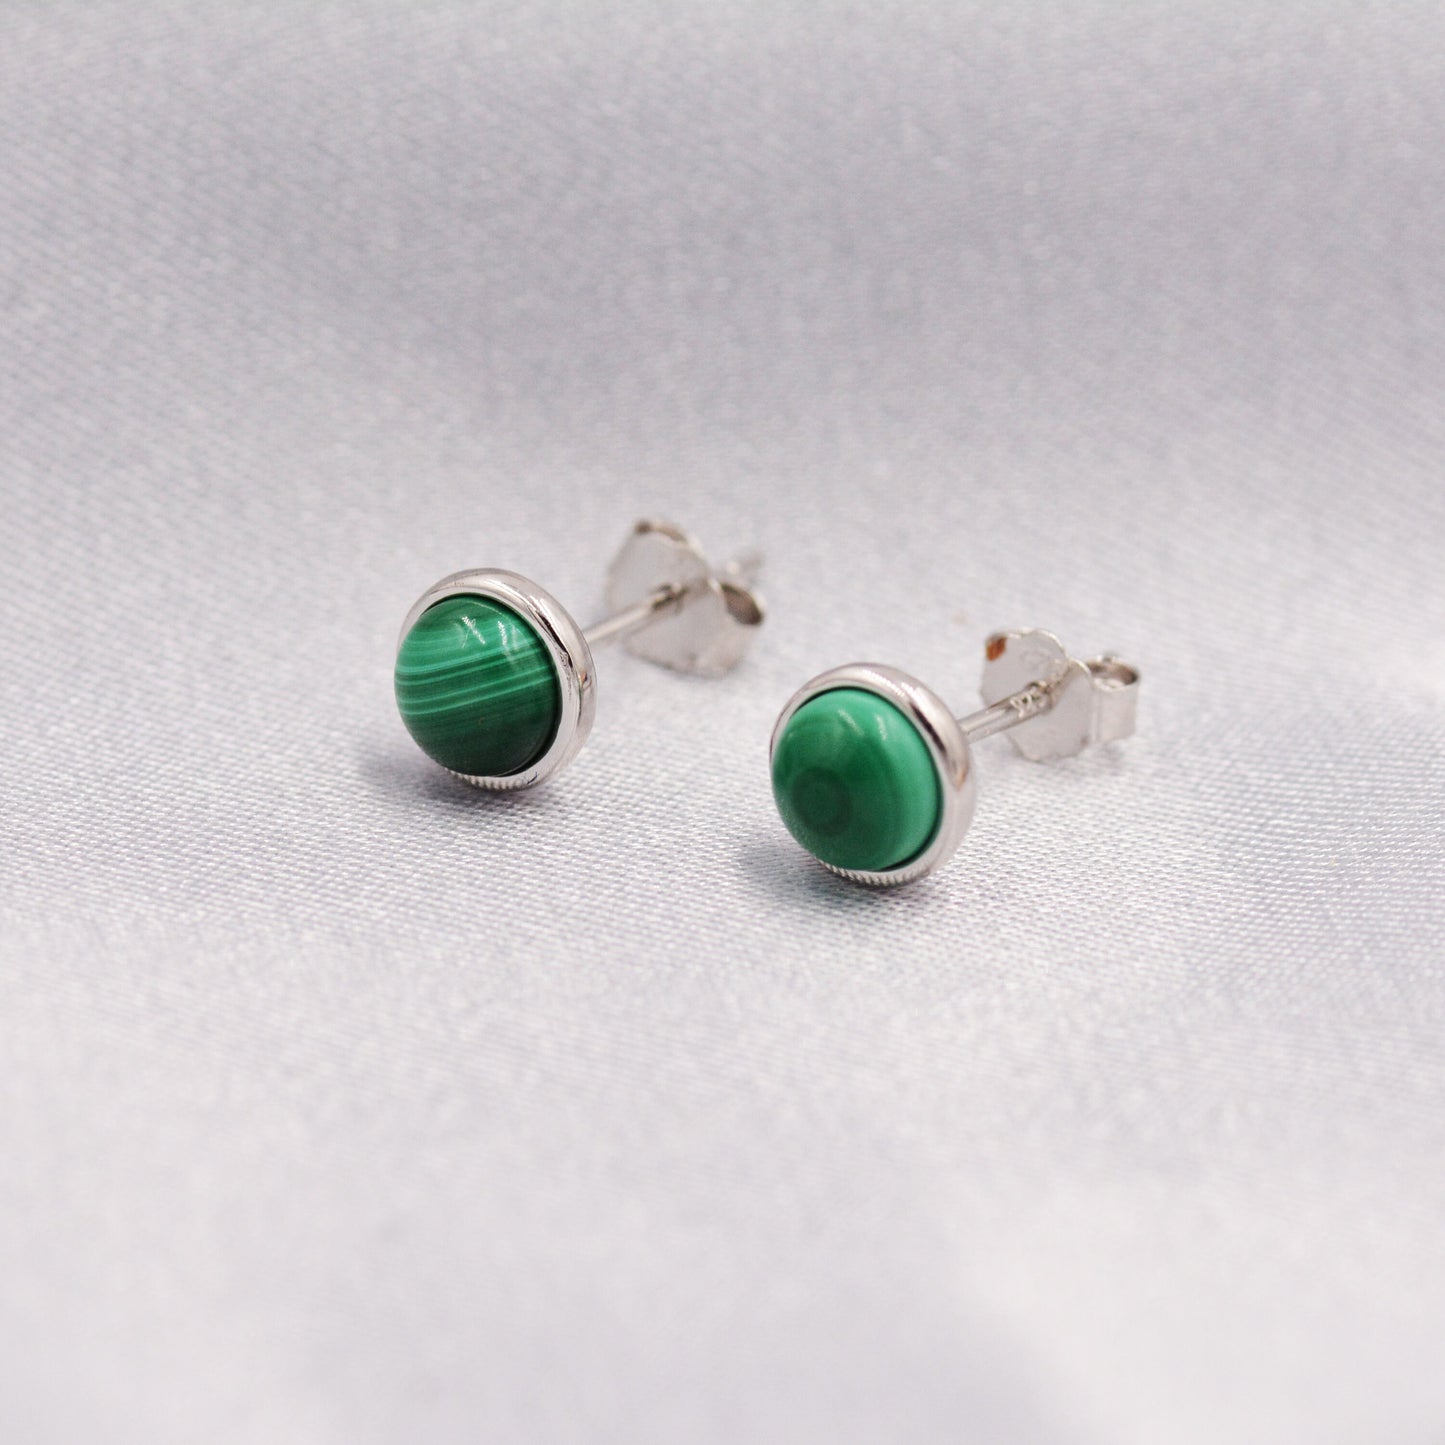 Natural Malachite Stone Stud Earrings in Sterling Silver - 5mm Genuine Malachite Stud Earrings  - Semi Precious Gemstone